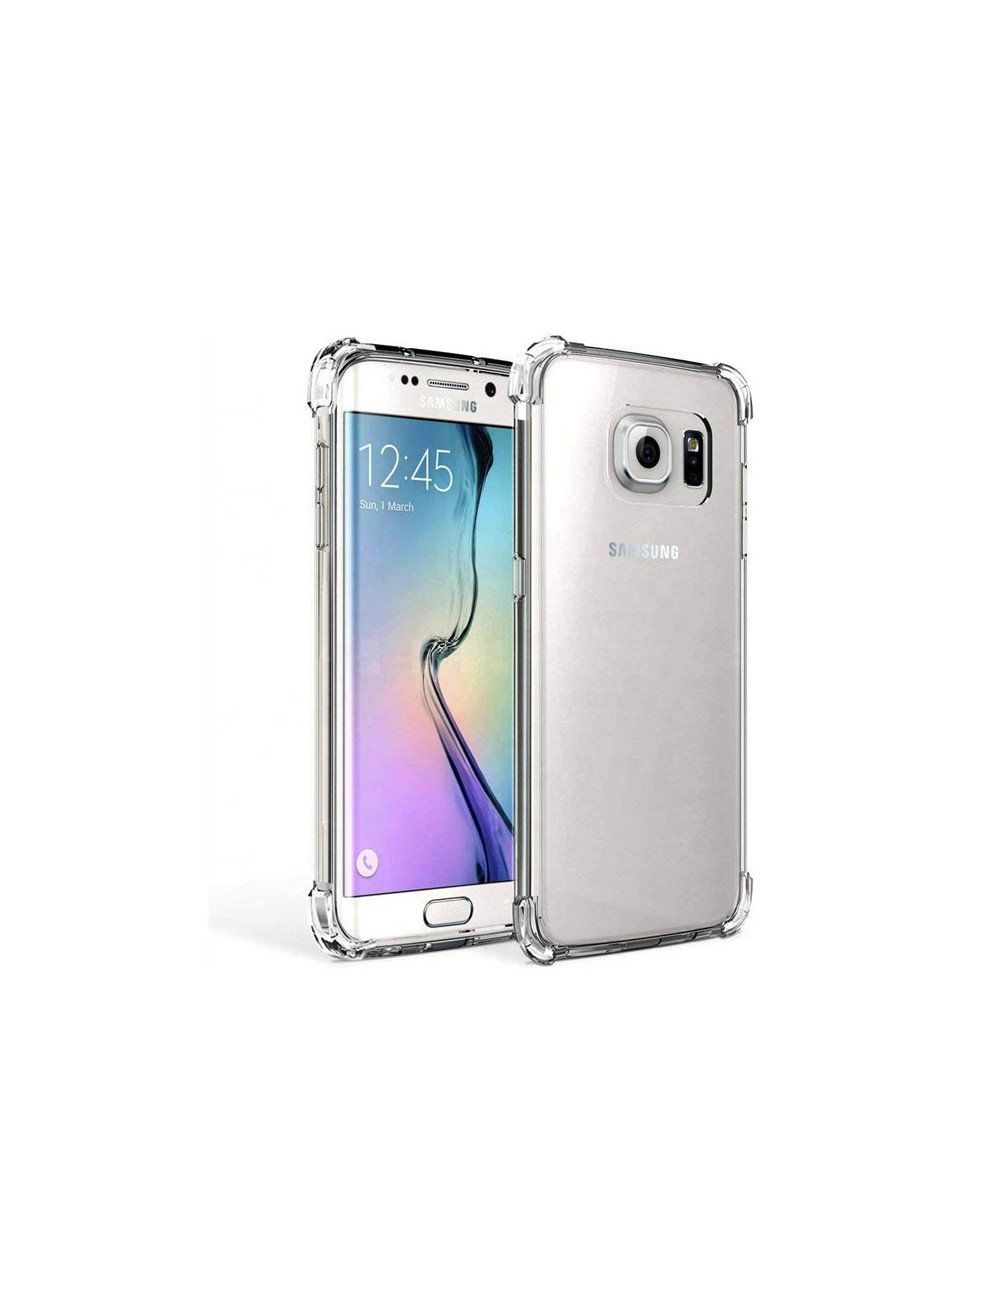 vervagen bewondering Kort leven Samsung Galaxy S7 Edge anti shock transparent TPU hoesje